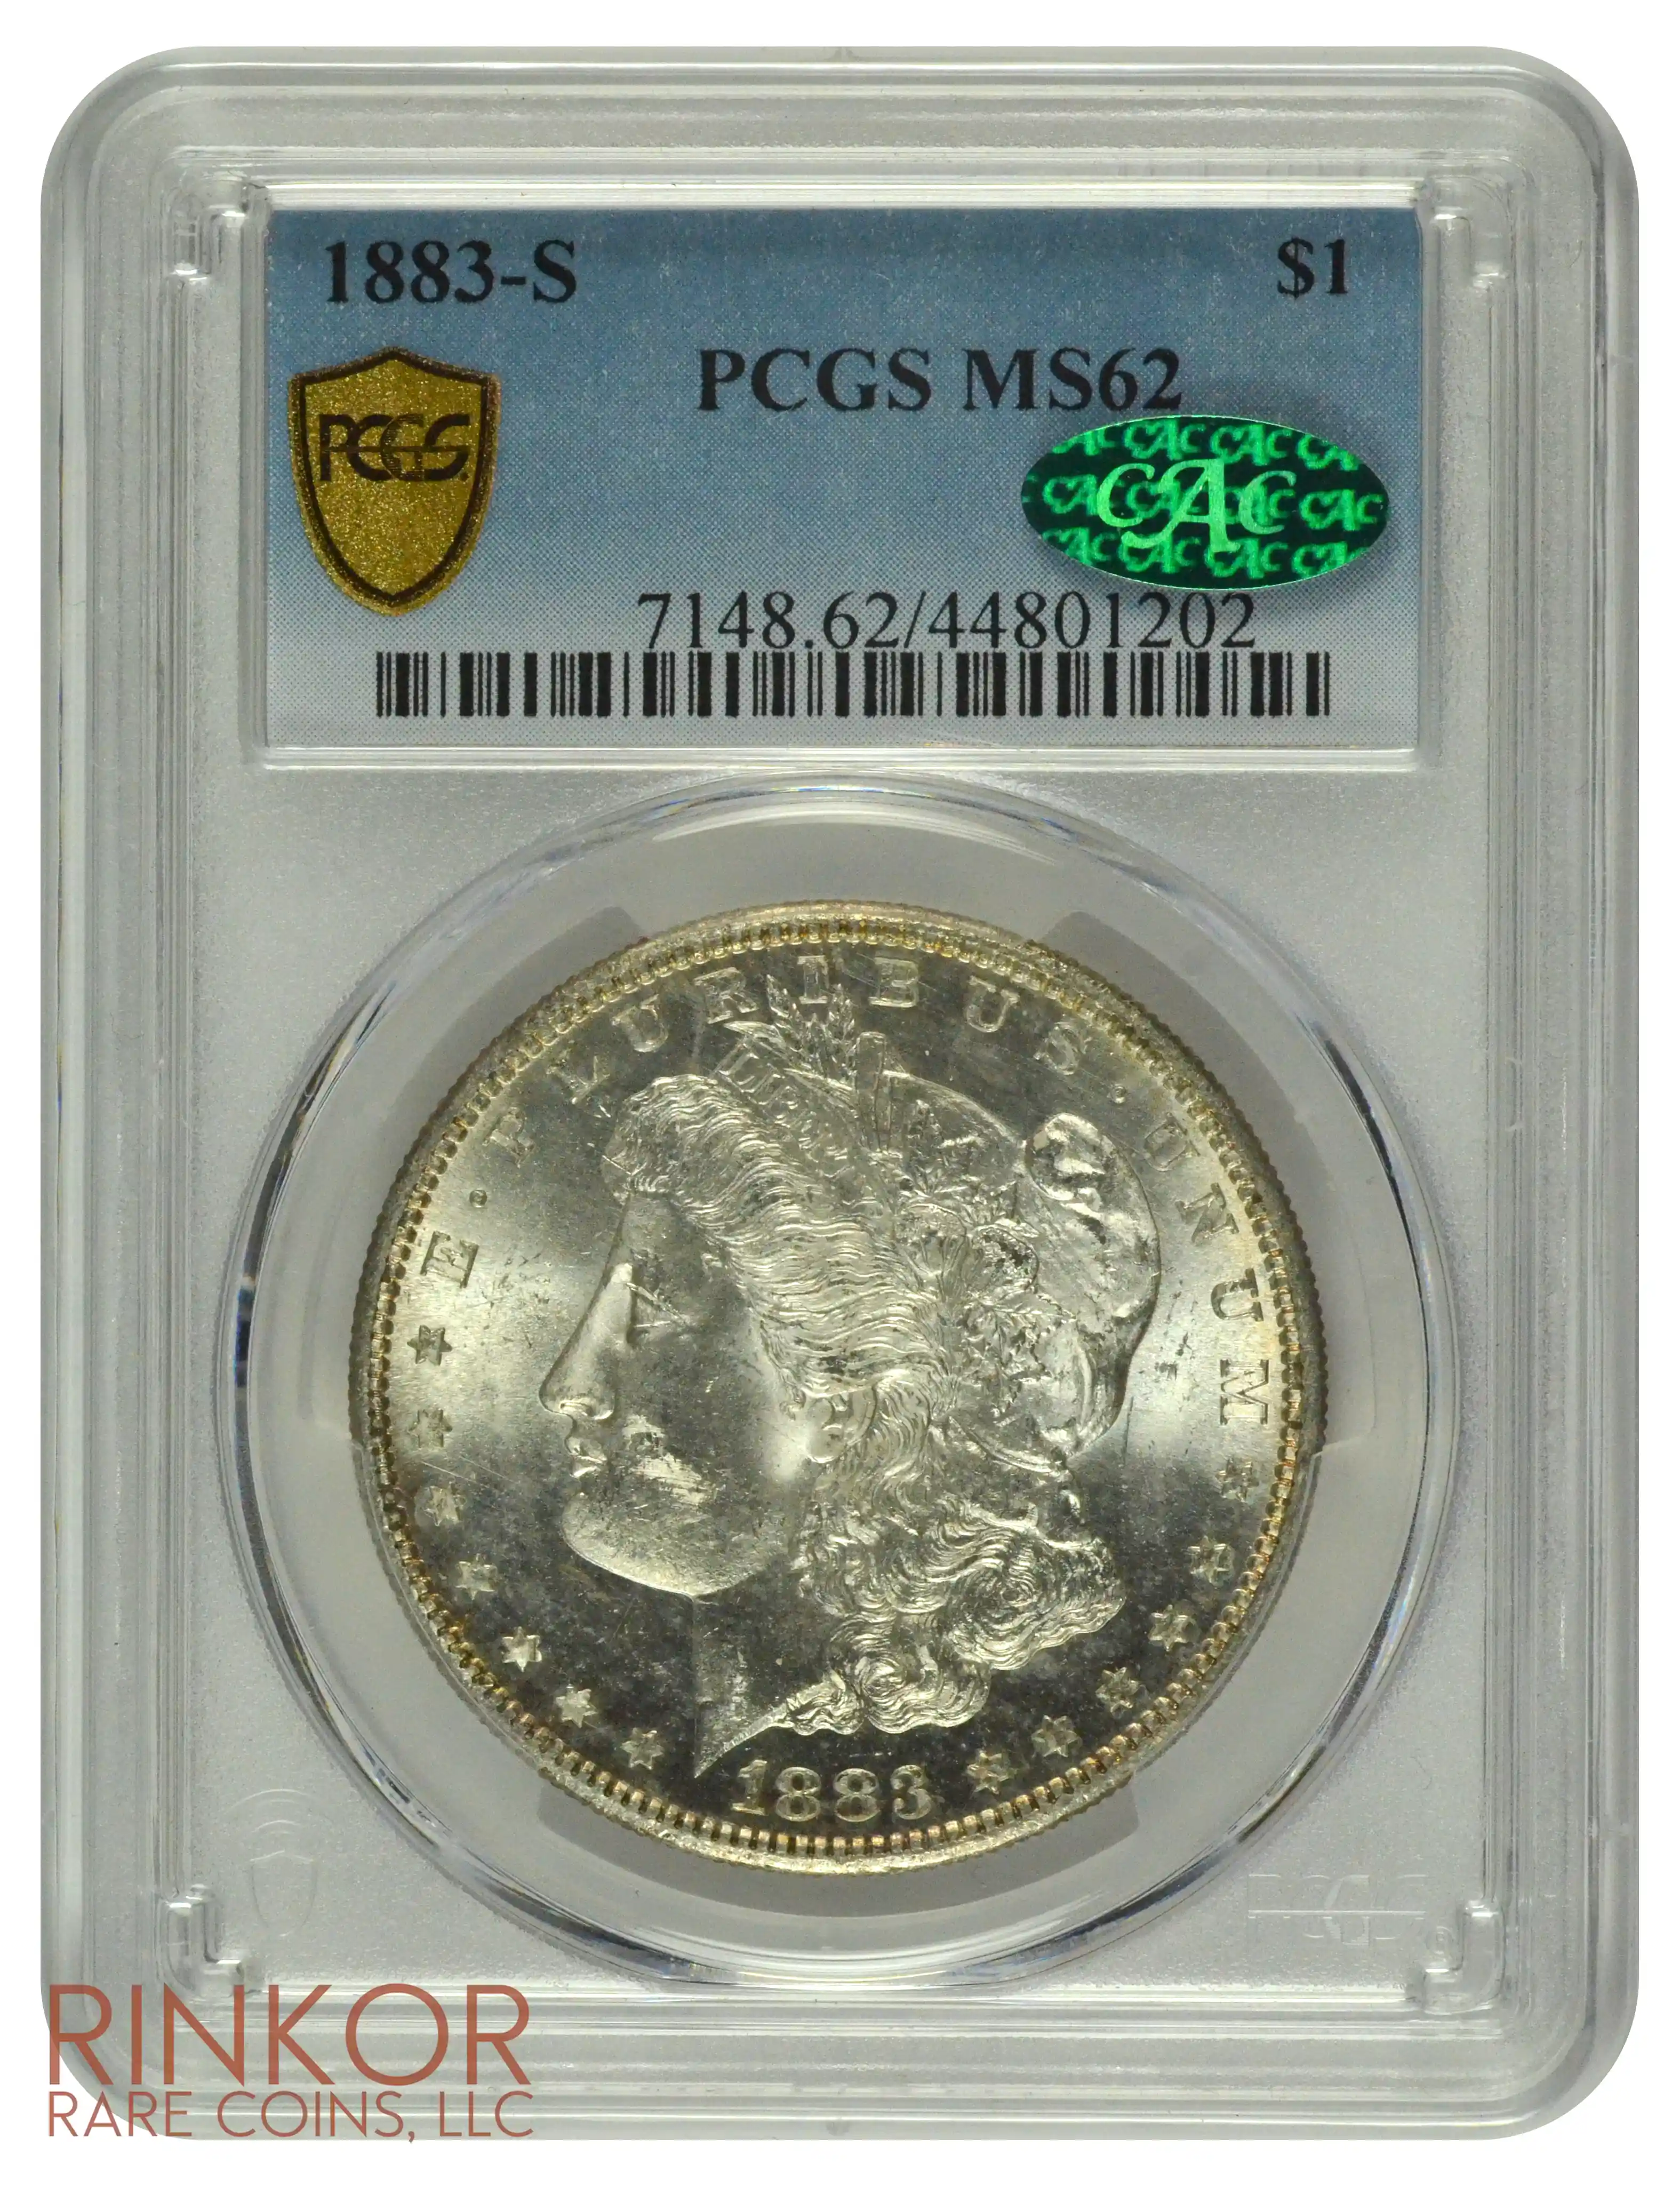 1883-S $1 PCGS MS 62 CAC